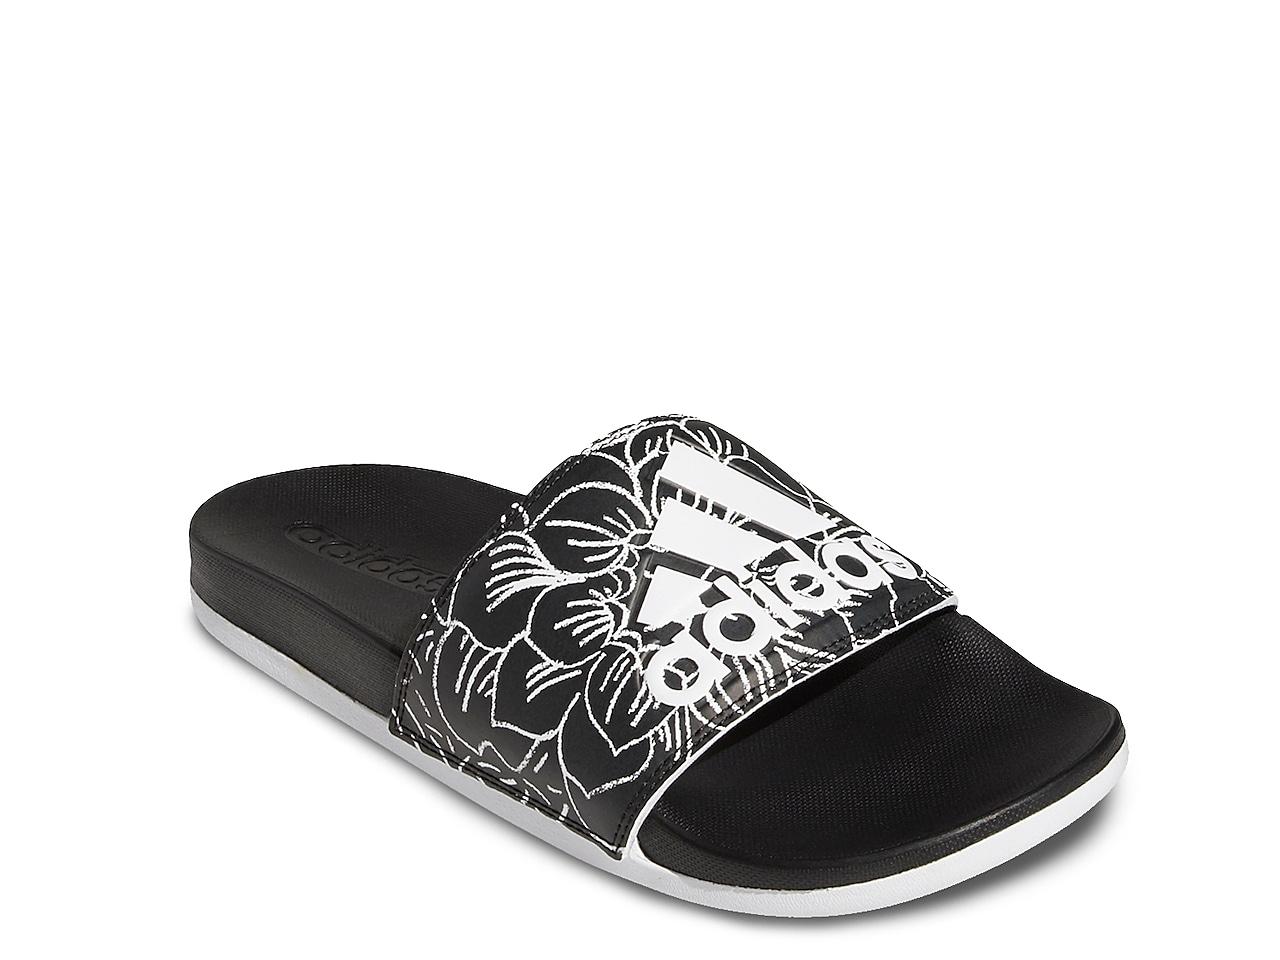 adidas Synthetic Adilette Cf Slide Sandal in Black/White Floral Print (Black)  | Lyst